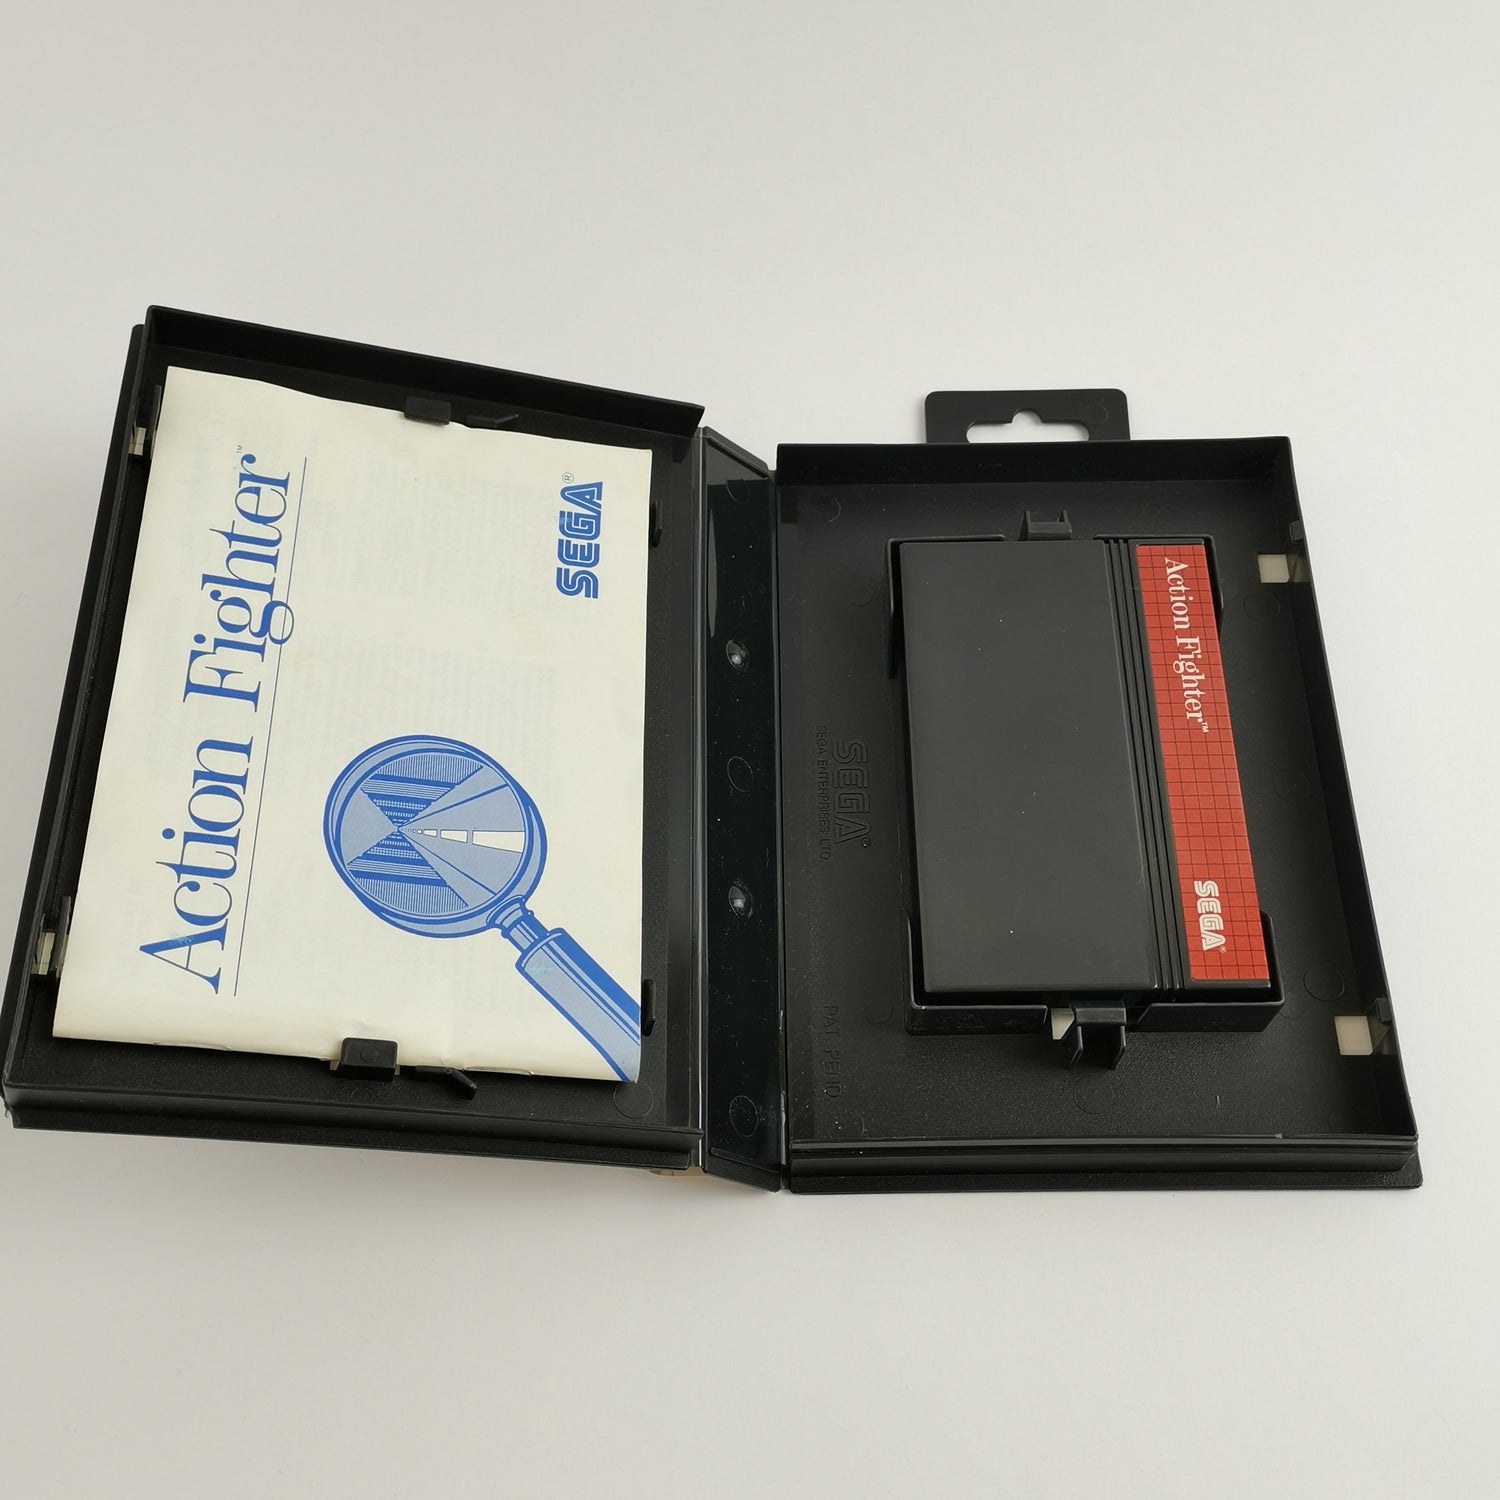 Sega Master System Game: Action Fighter - European PAL version | MS original packaging